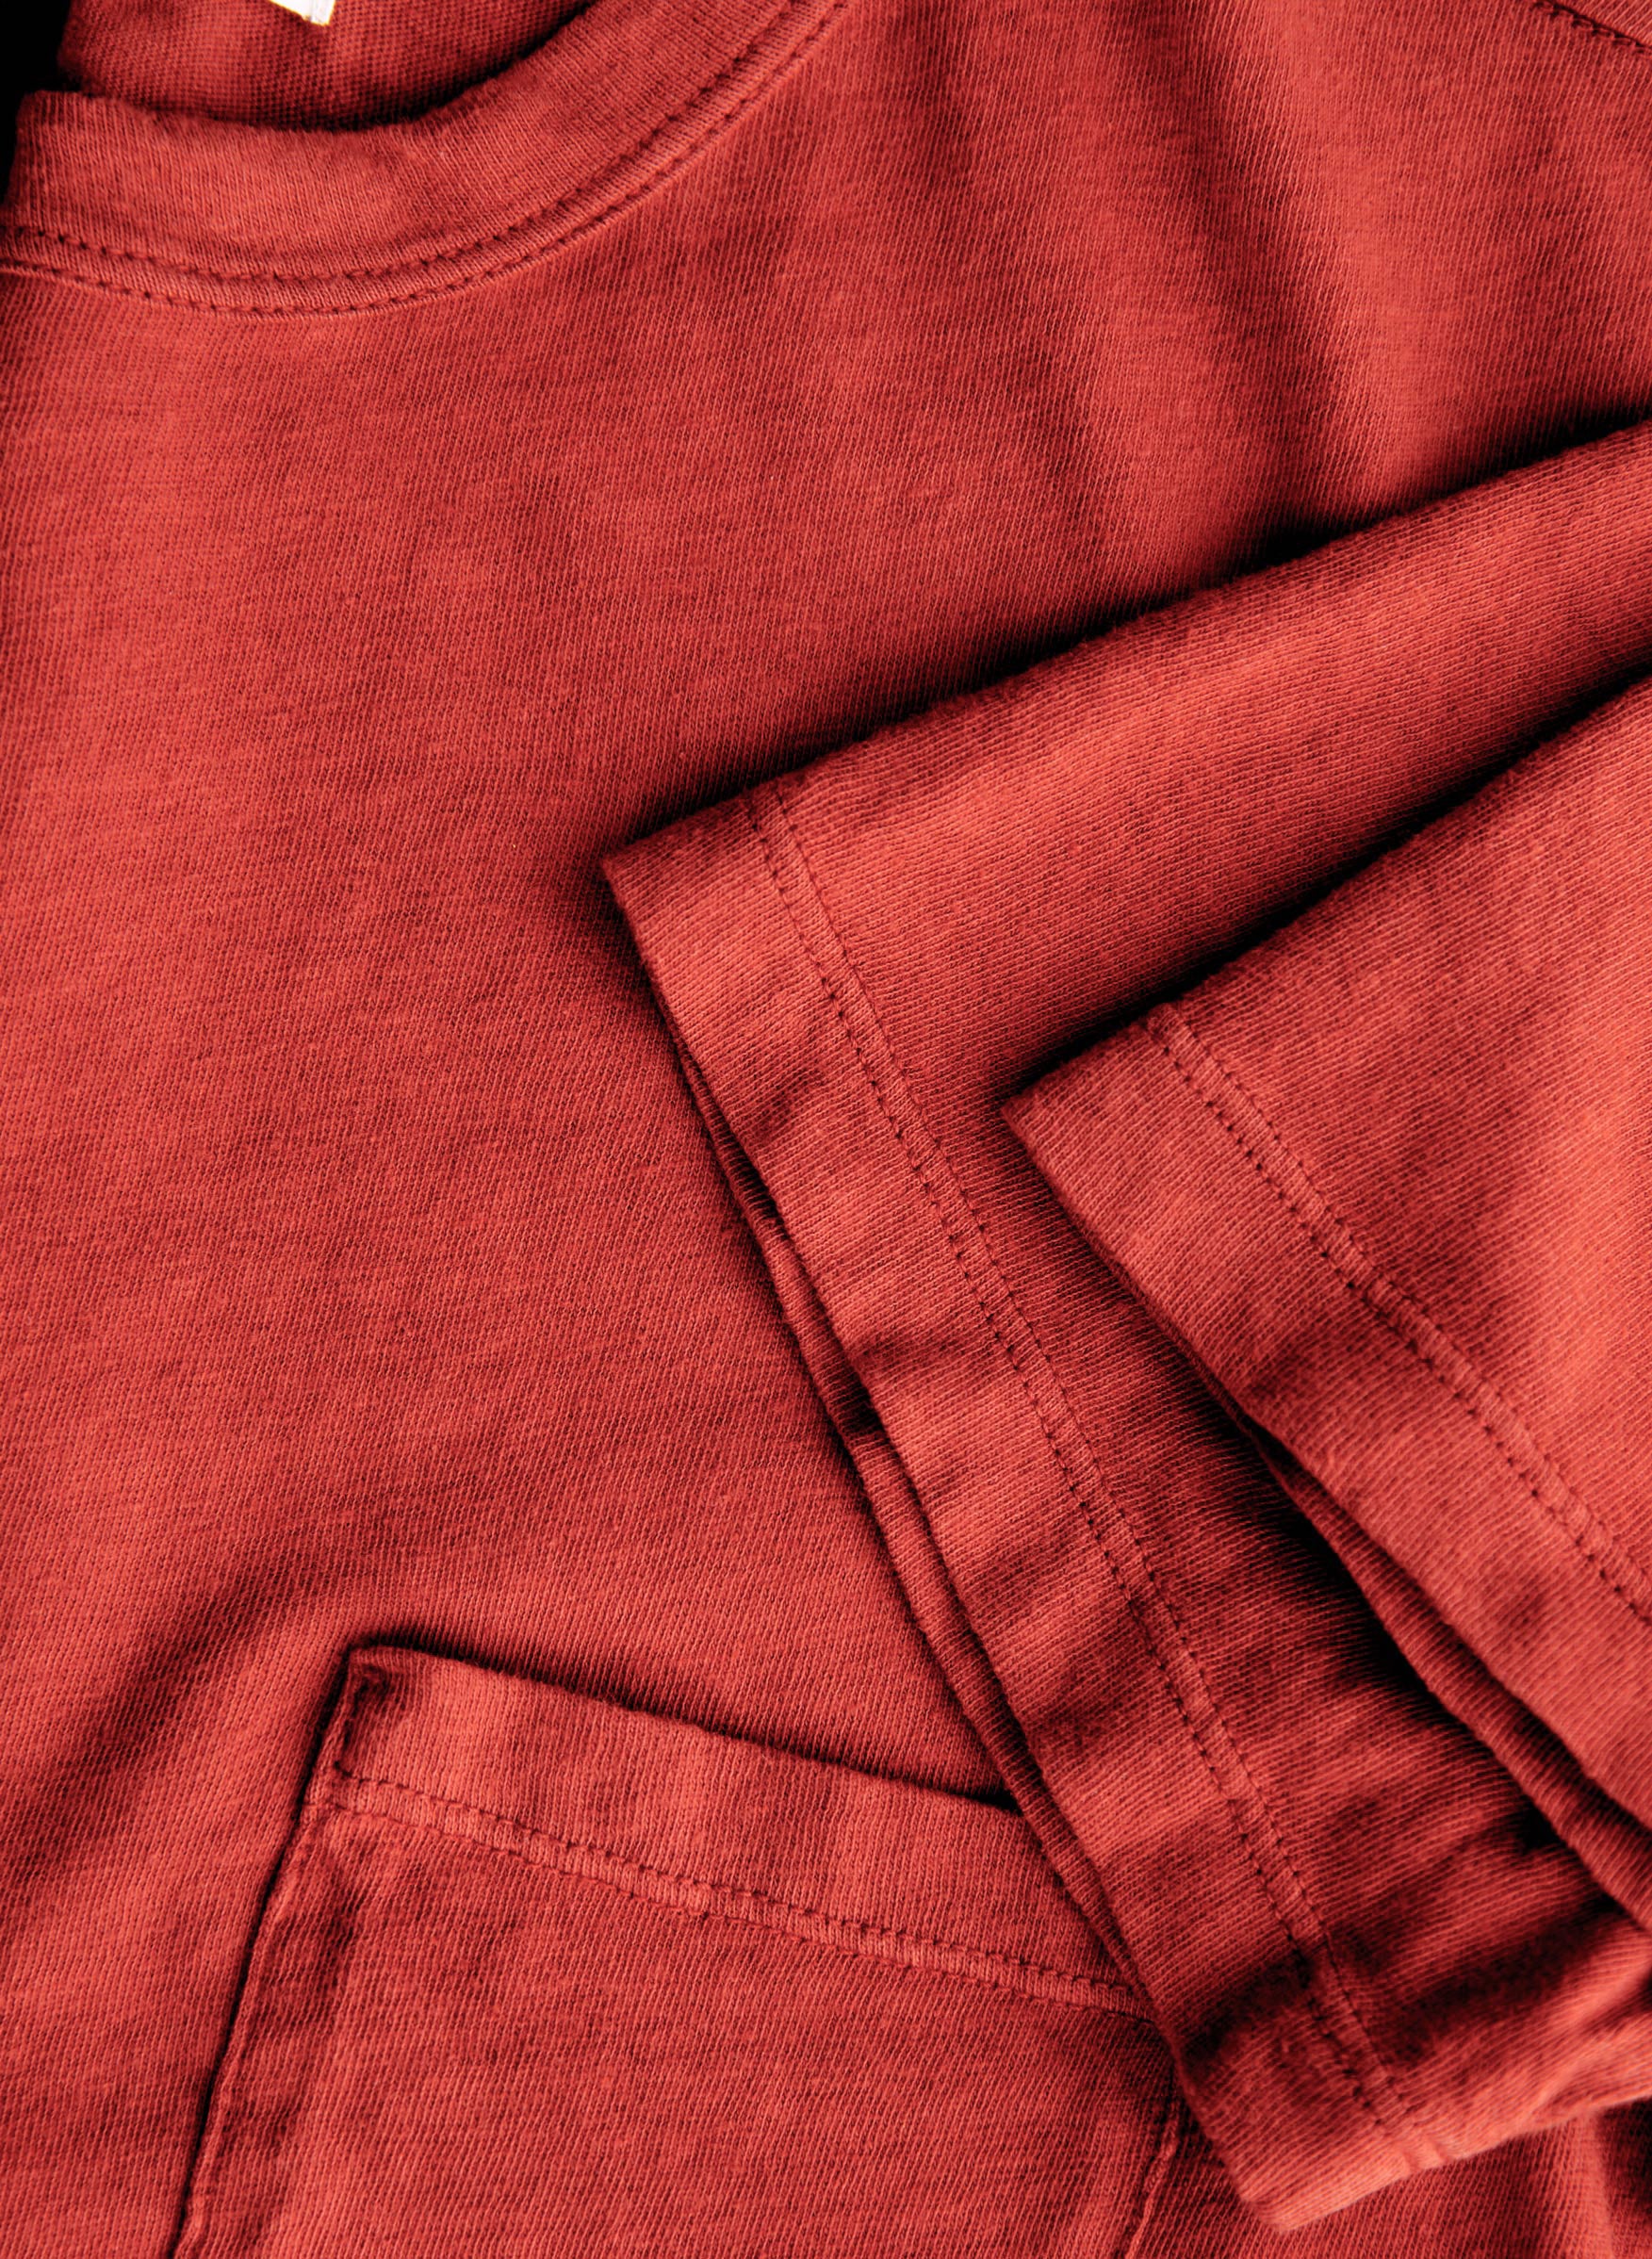 Outerwear, Textile, Sleeve, Orange, Grey, Collar, Red, Blazer, Tints and shades, Magenta